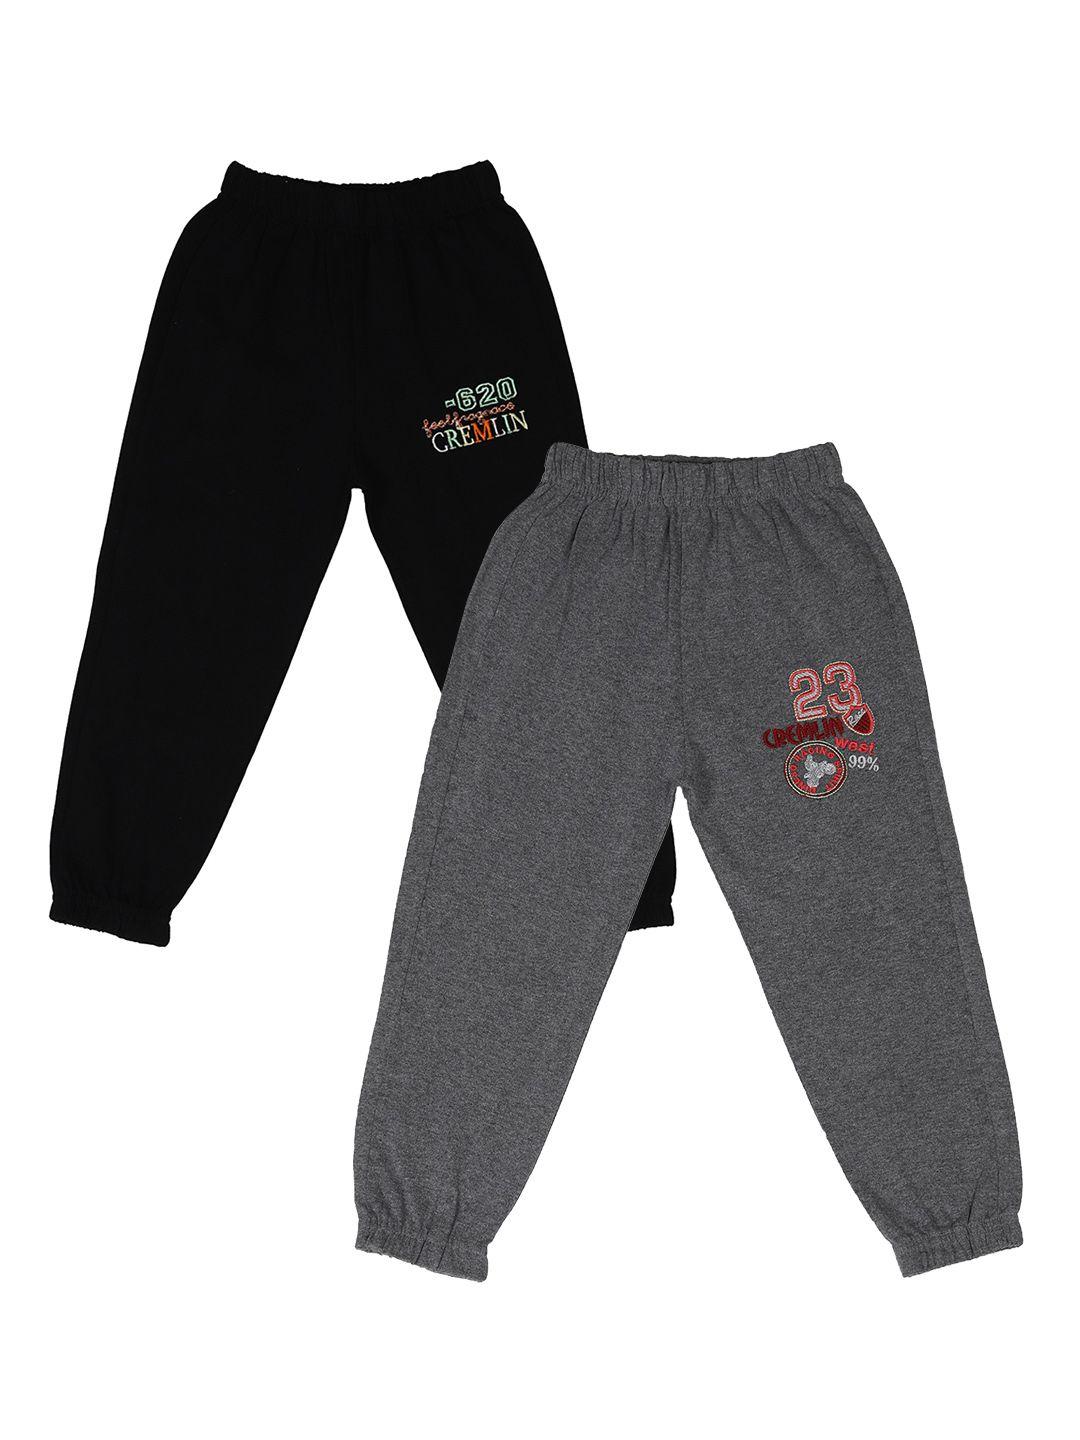 cremlin clothing kids pack of 2 grey & black printed joggers